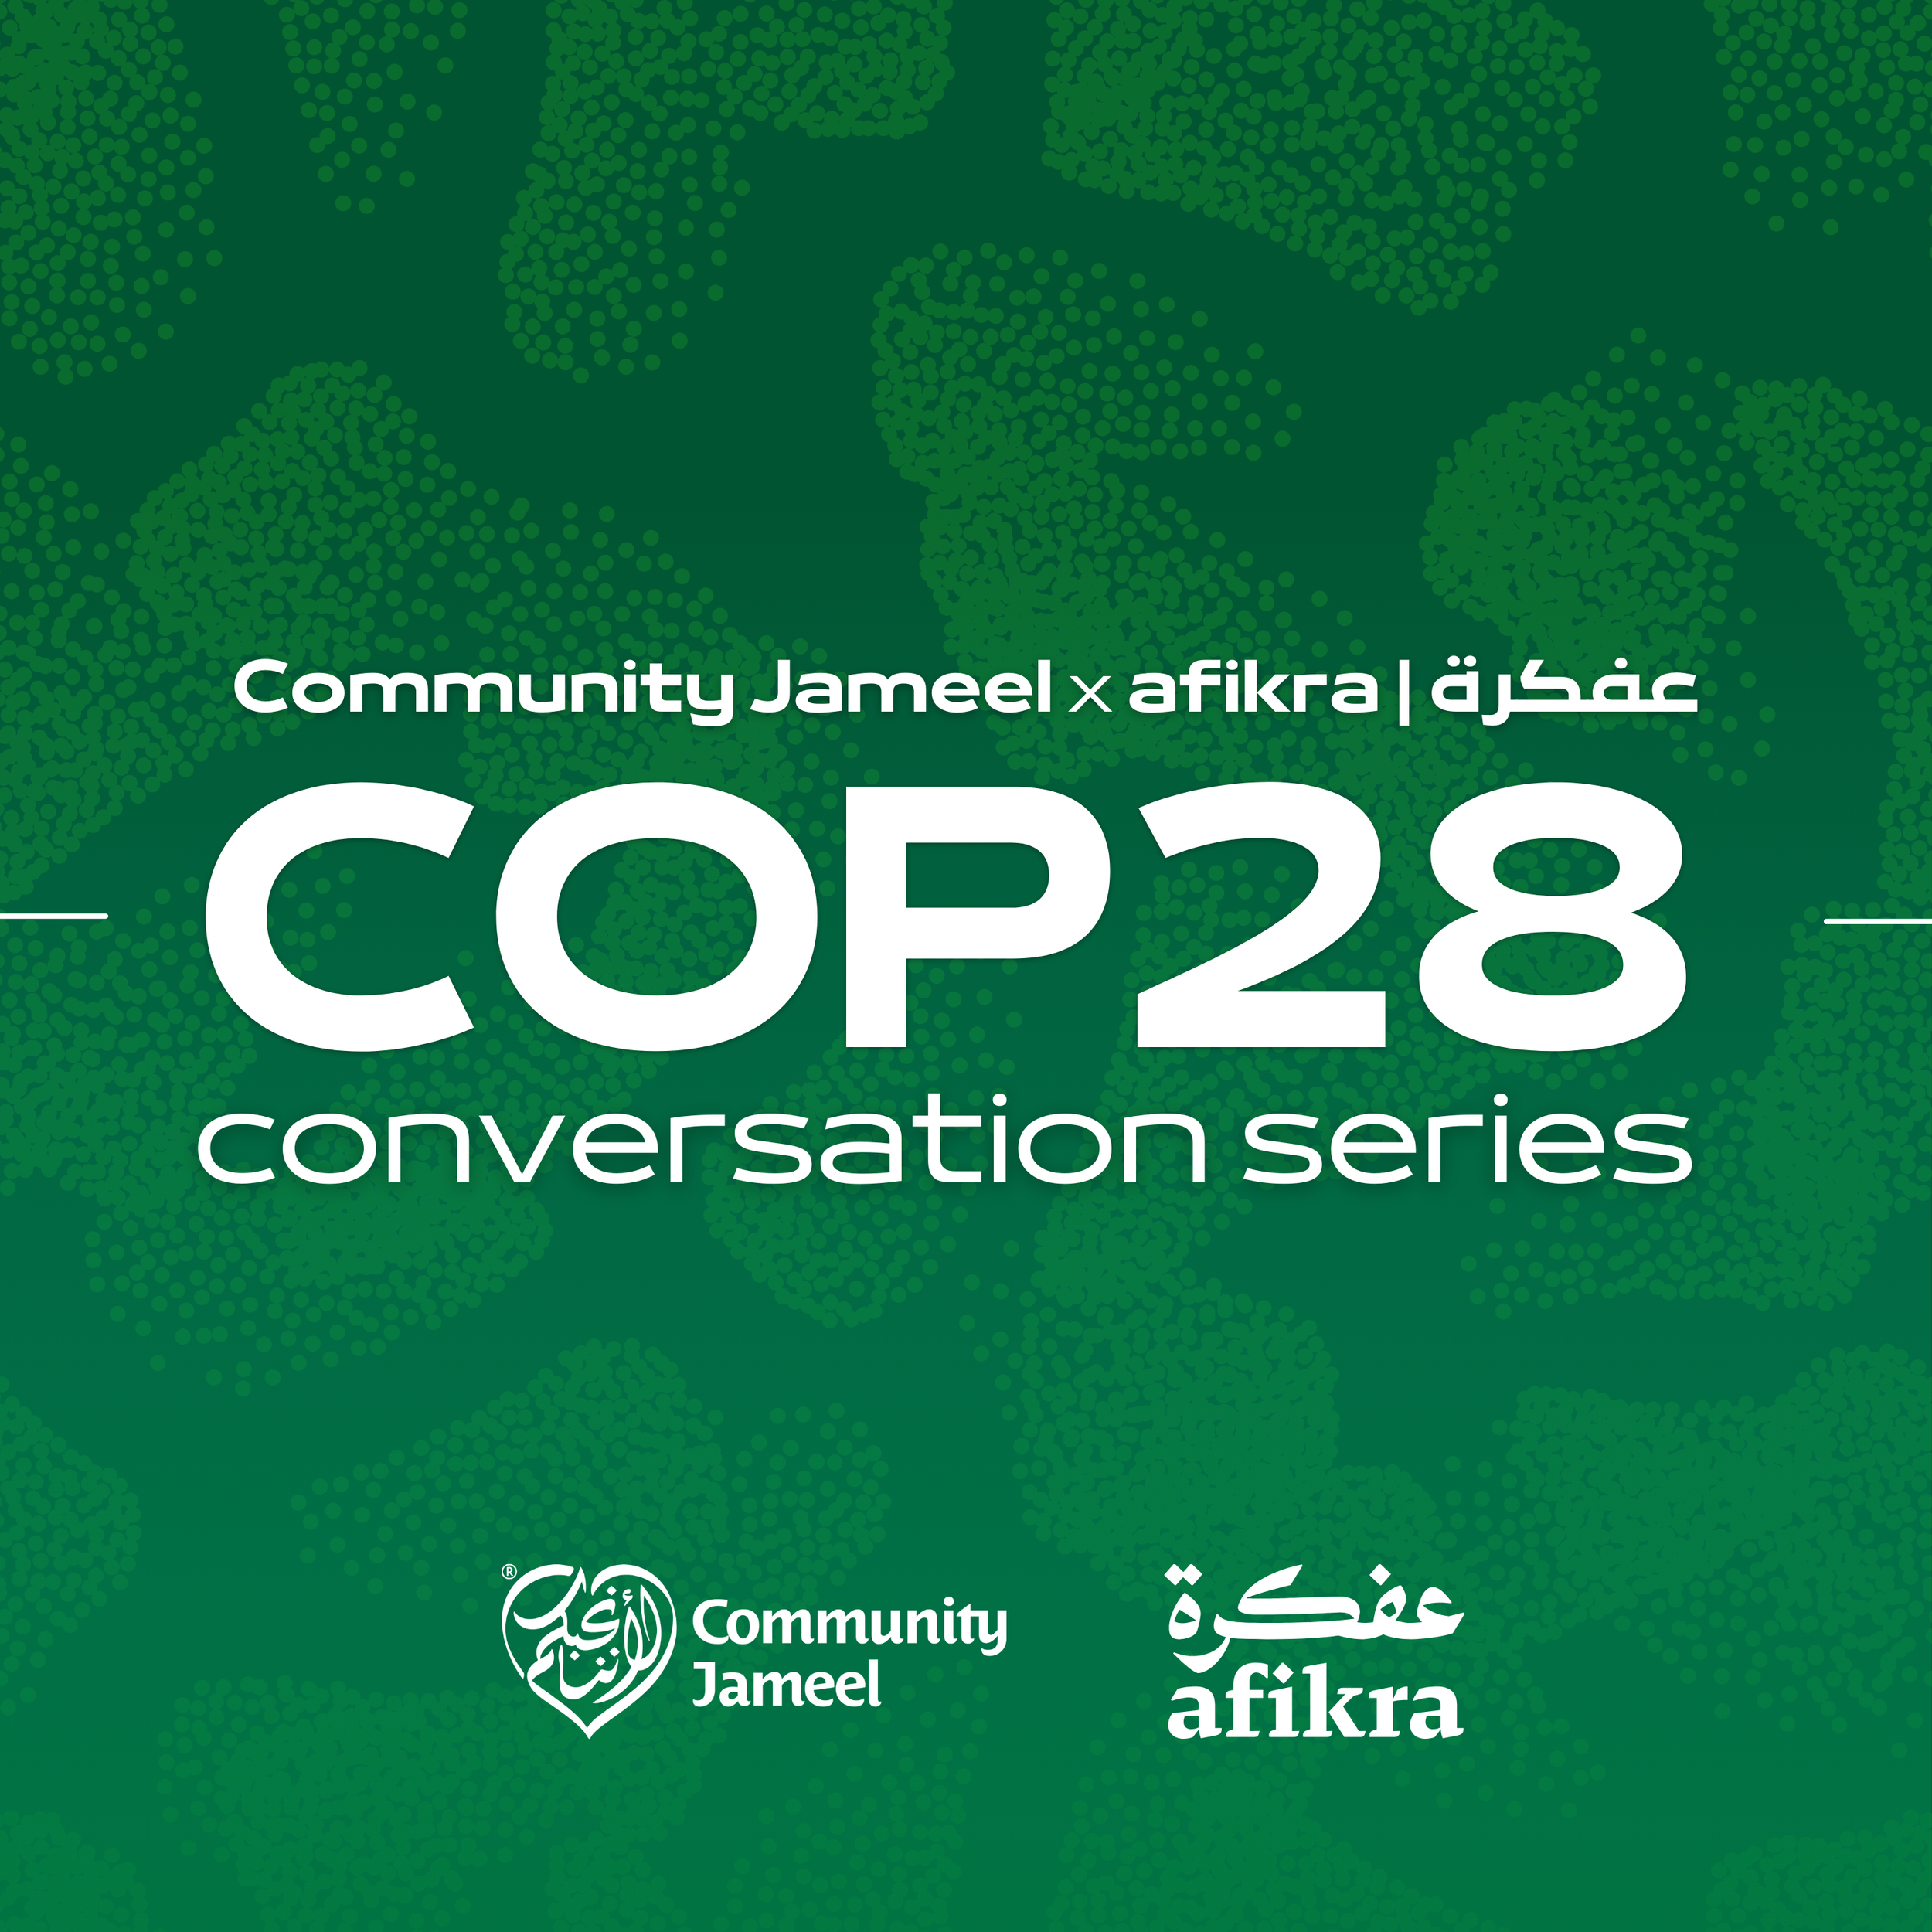 COMMUNITY JAMEEL X AFIKRA COP28 CONVERSATION SERIES